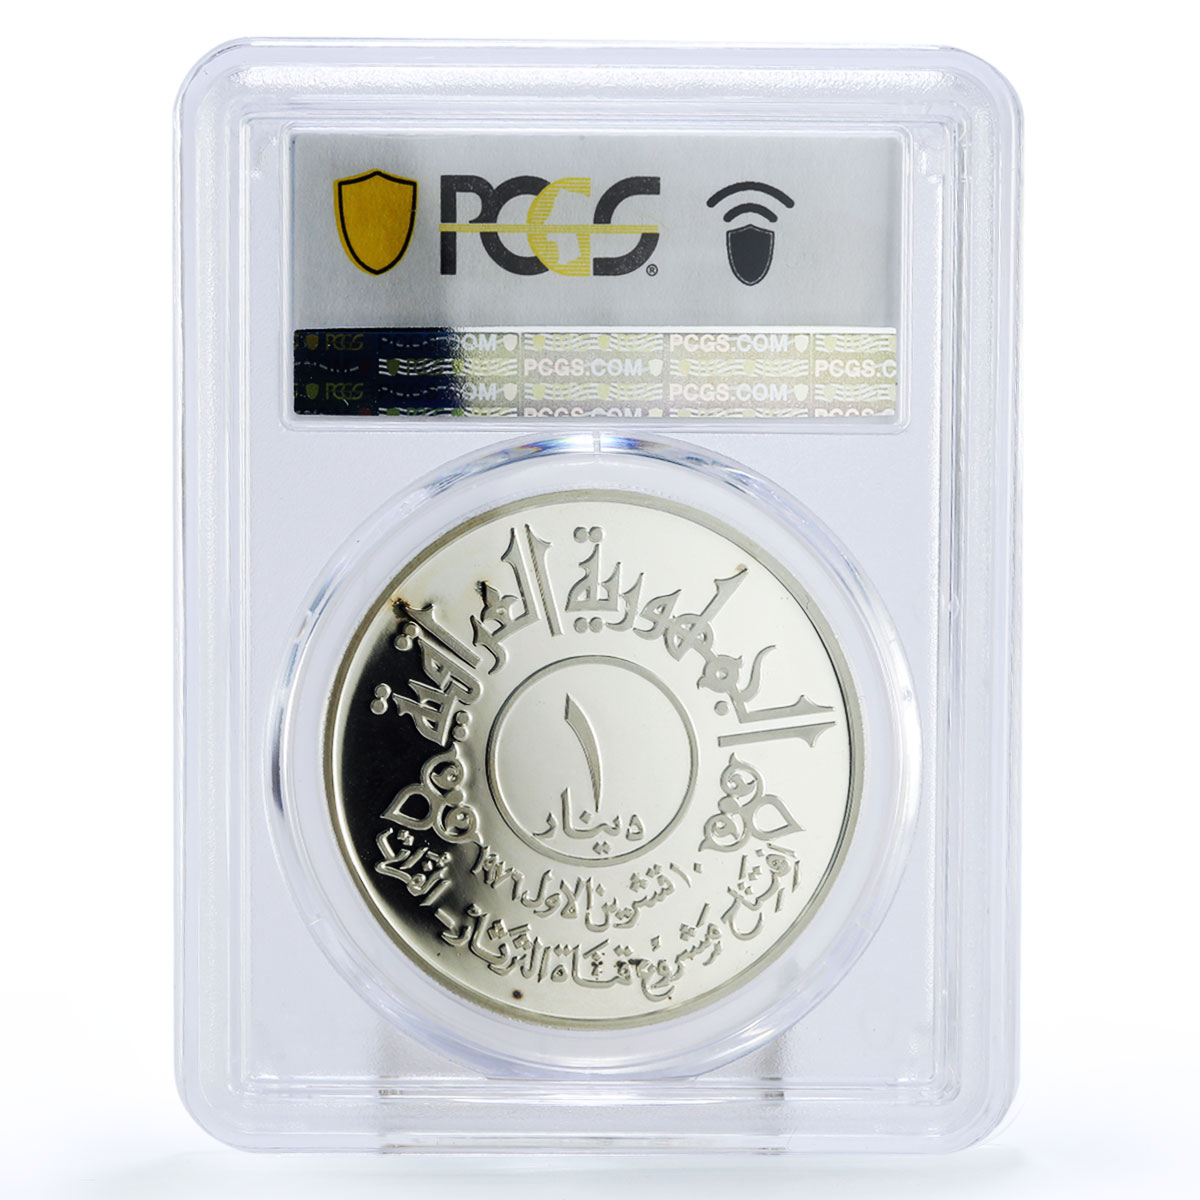 Iraq 1 dinar Tharthar Euphrates Canal PR67 PCGS proof silver coin 1977